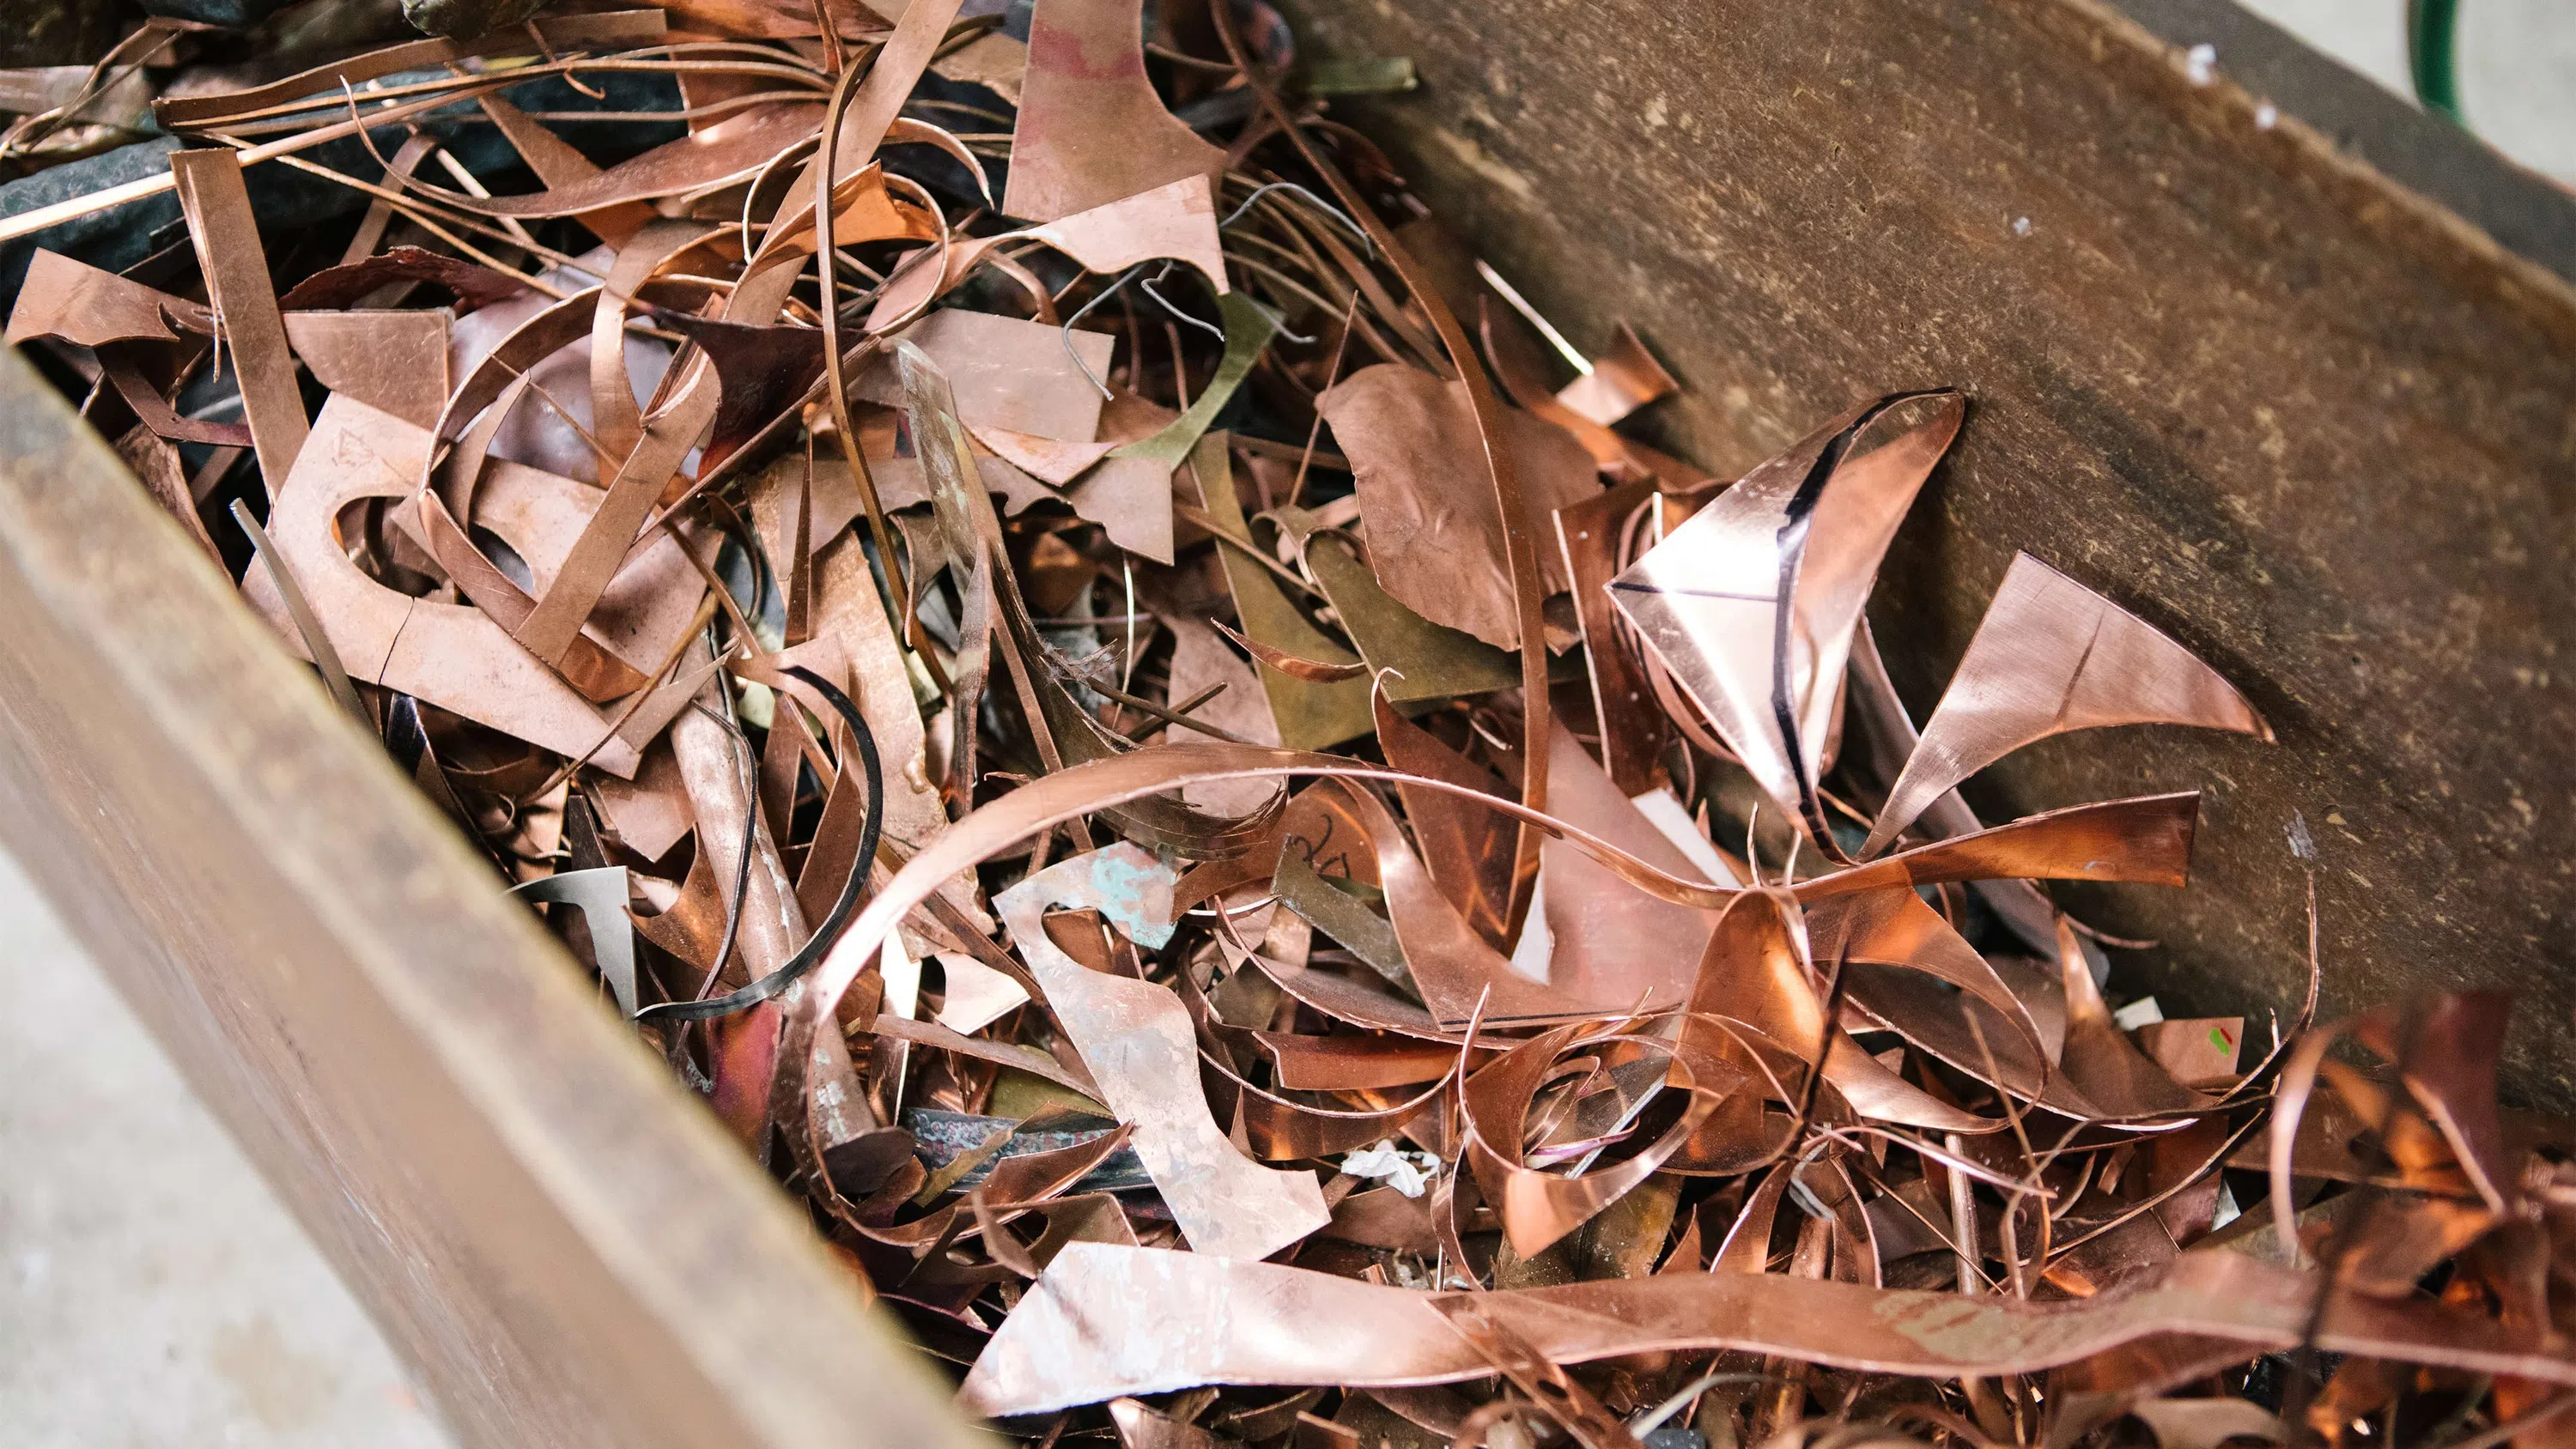 A close-up of irregular scraps of copper.